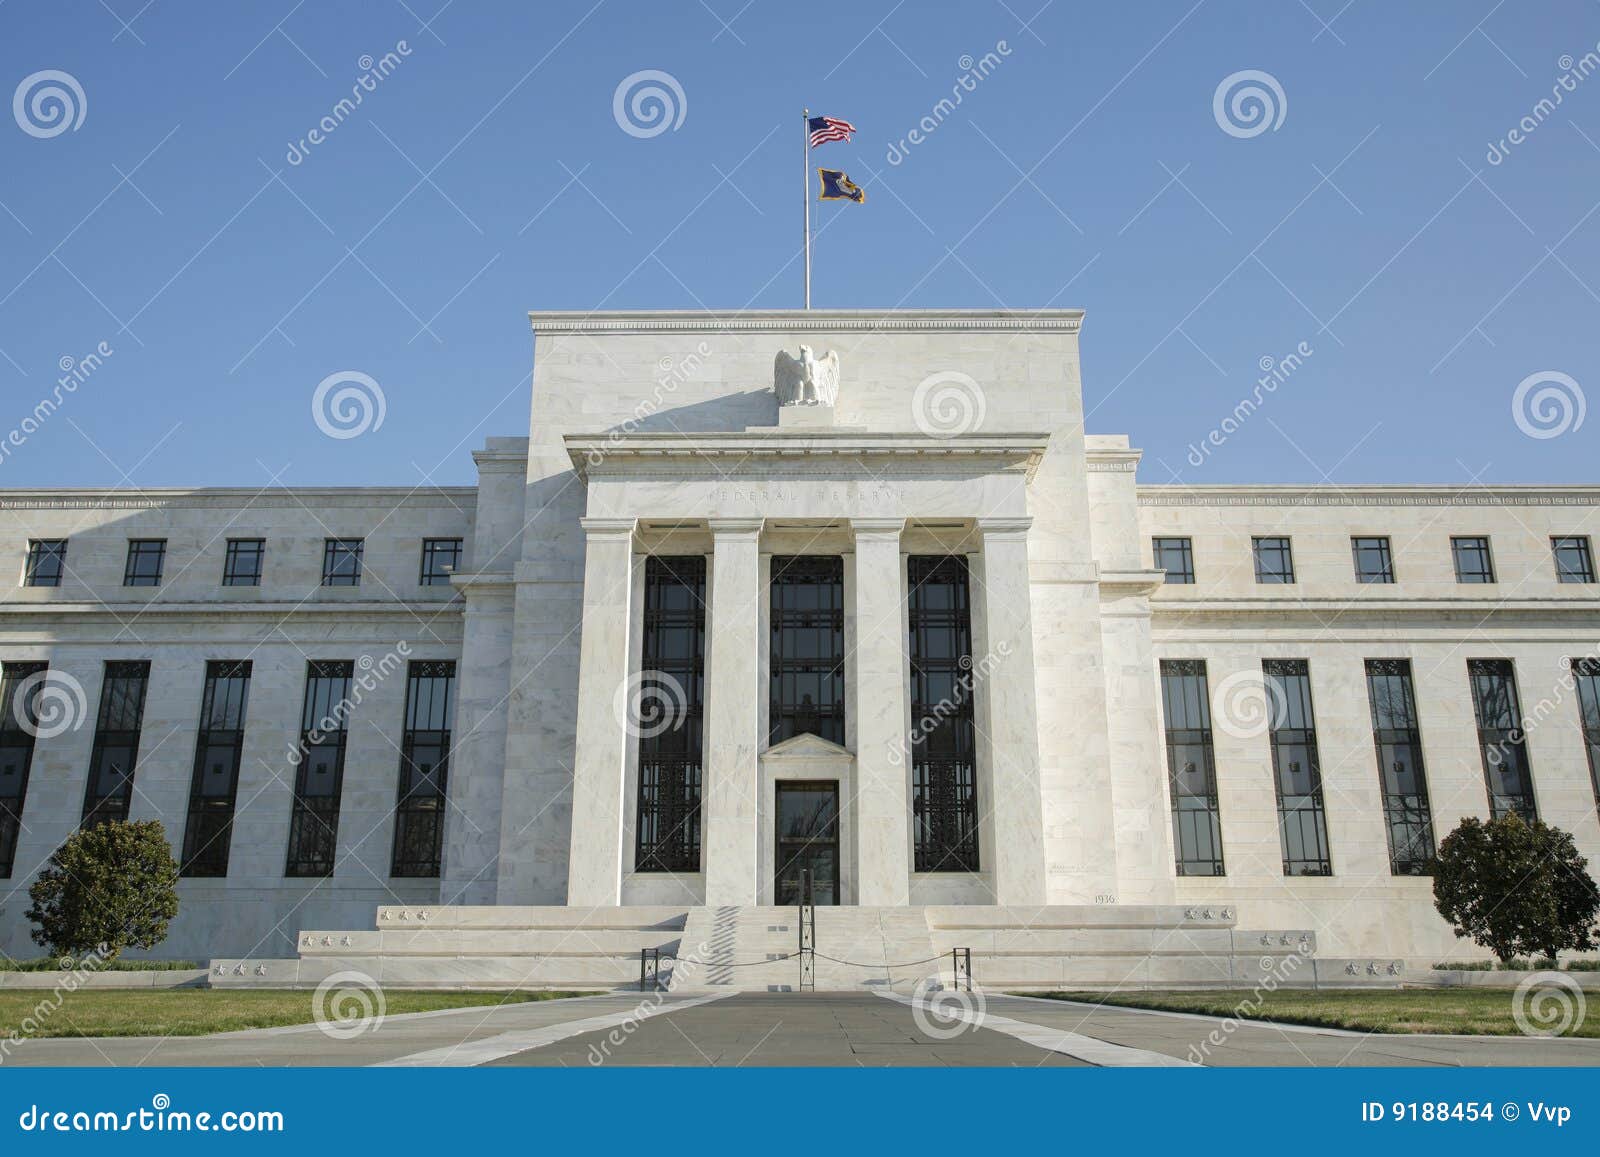 federal reserve bank, washington, dc, usa